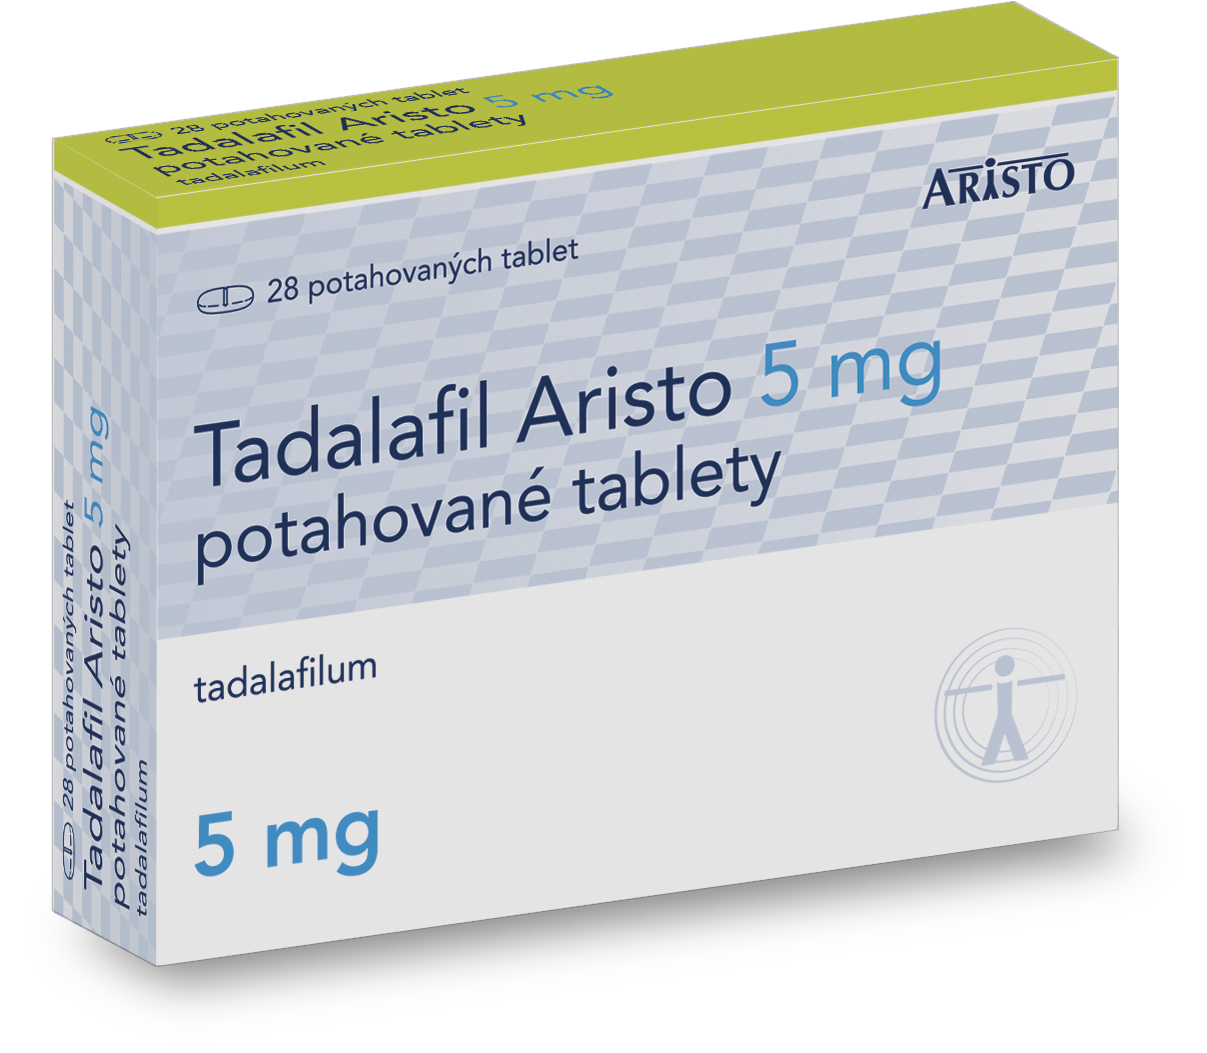 Tadalafil Aristo 5 mg